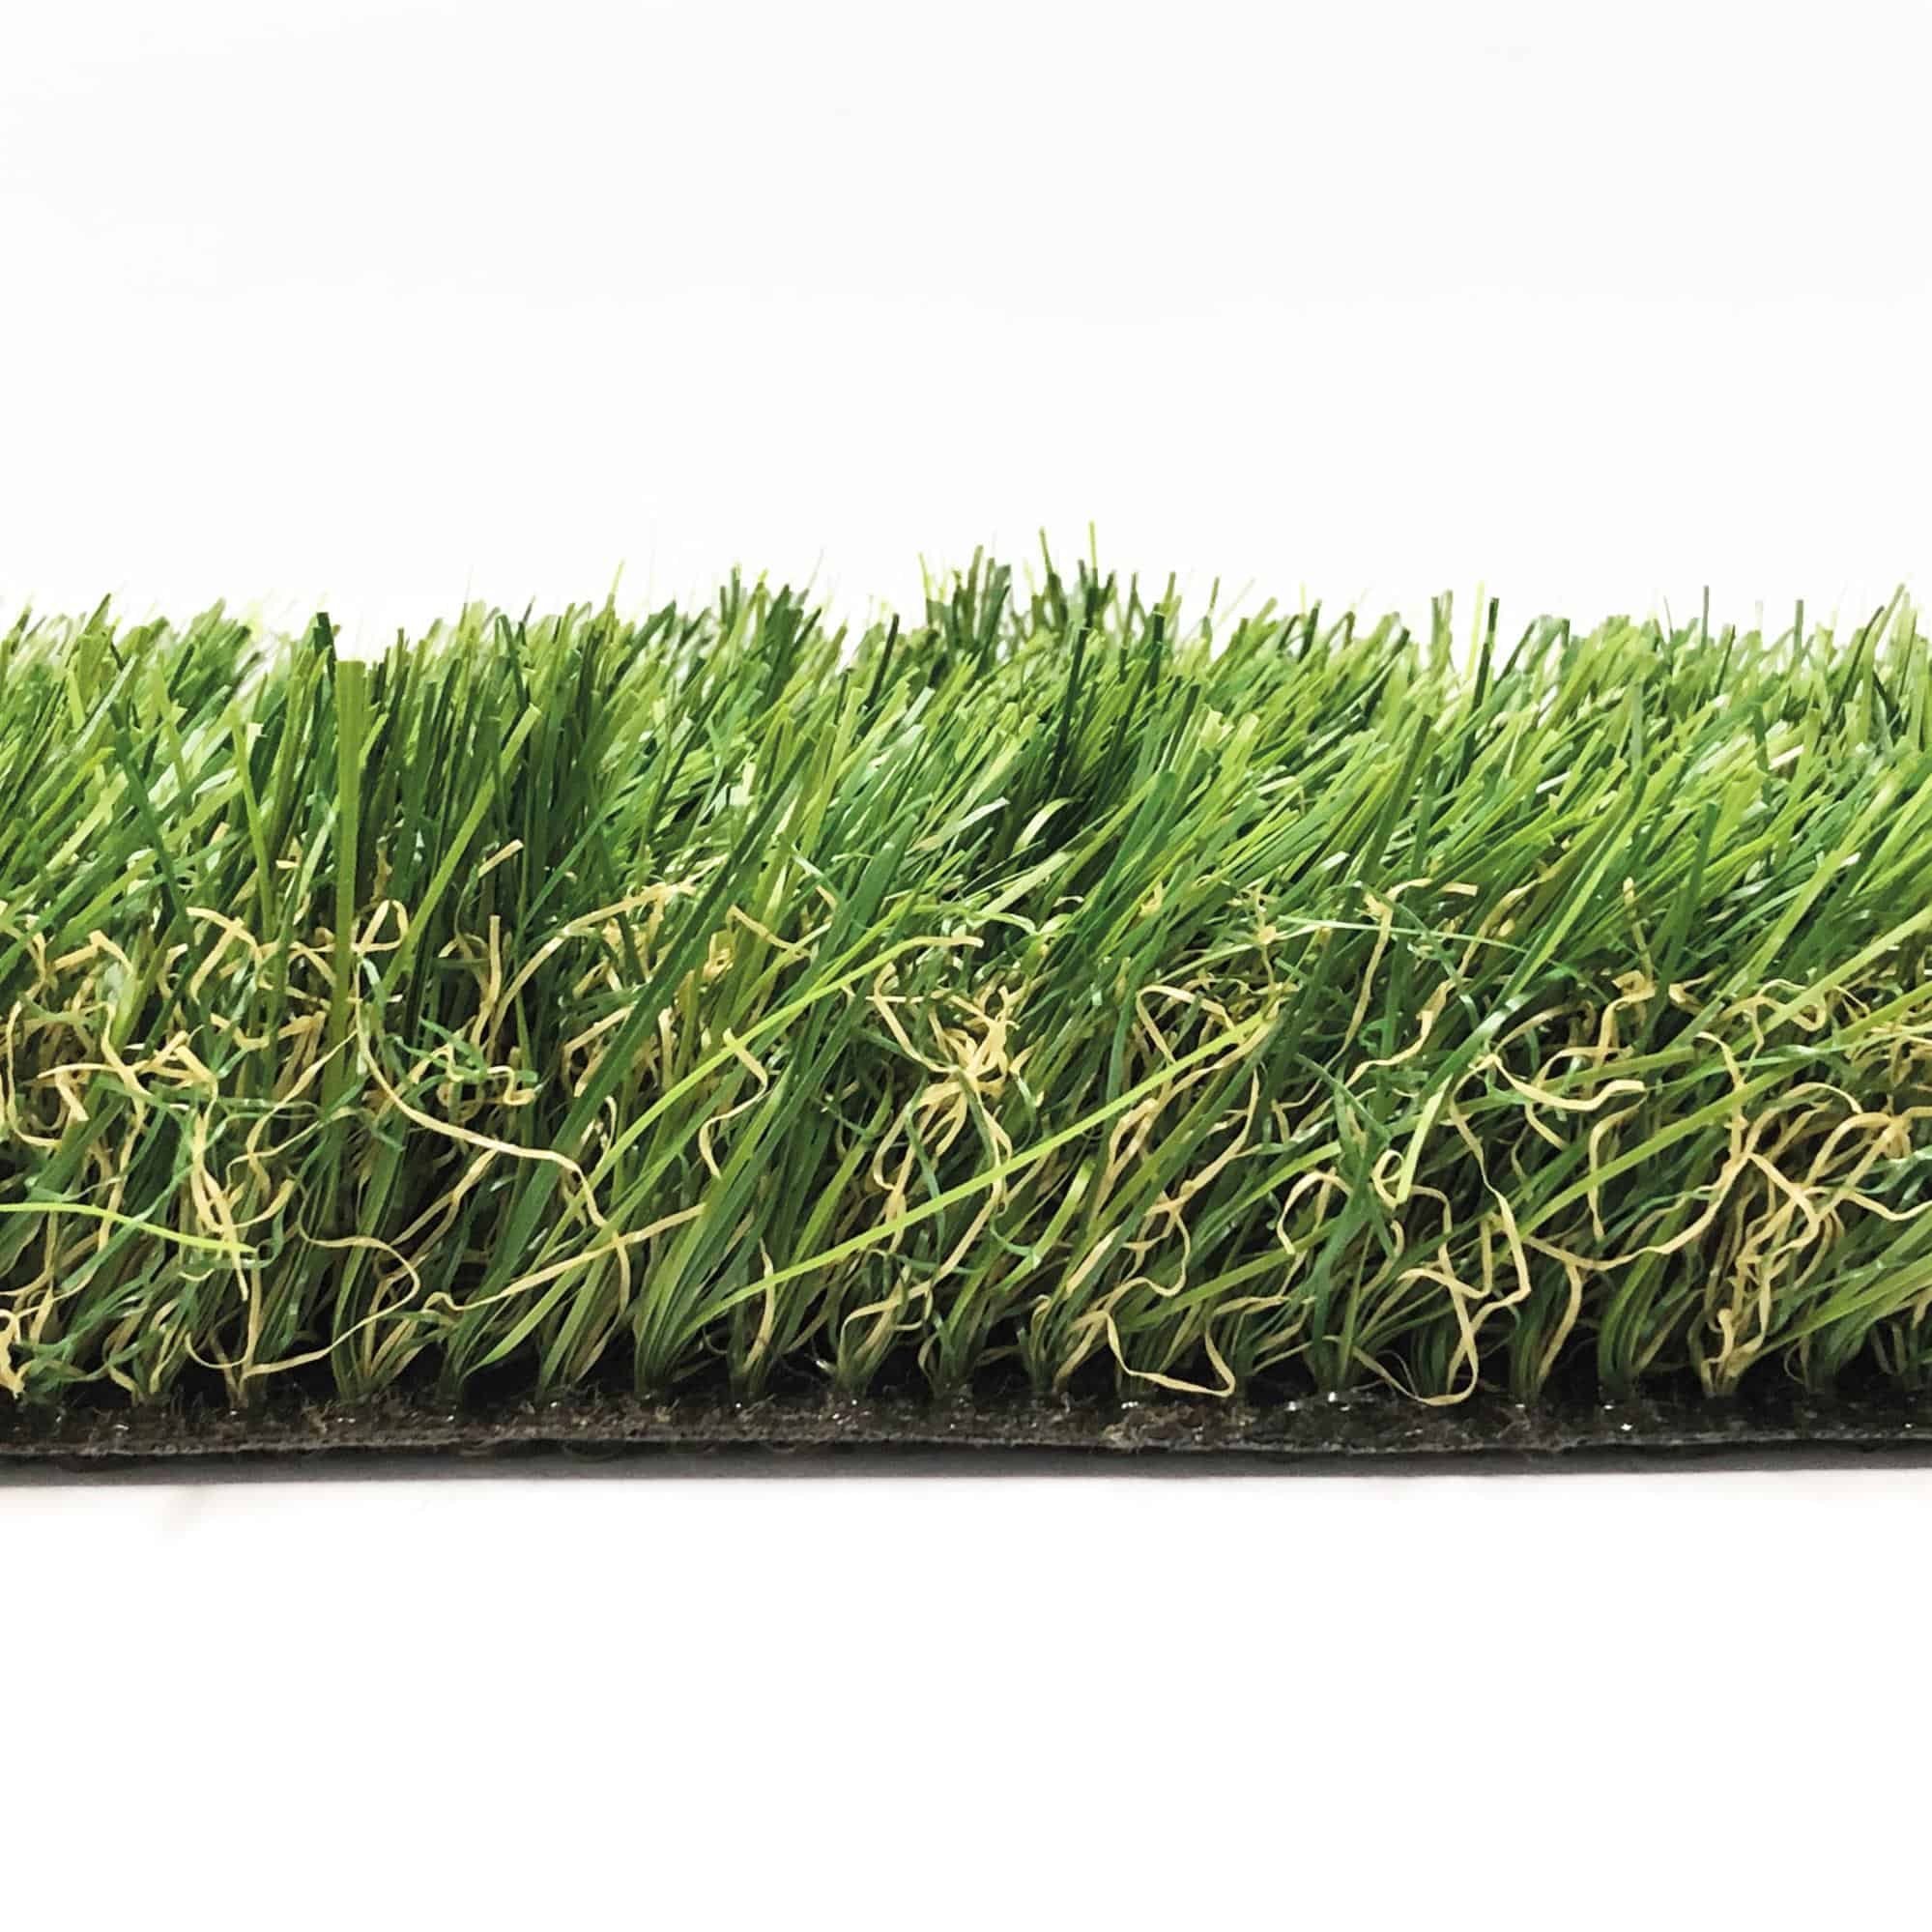 CORE Lawn Natural Artificial Grass 4m Wide Roll 14 m